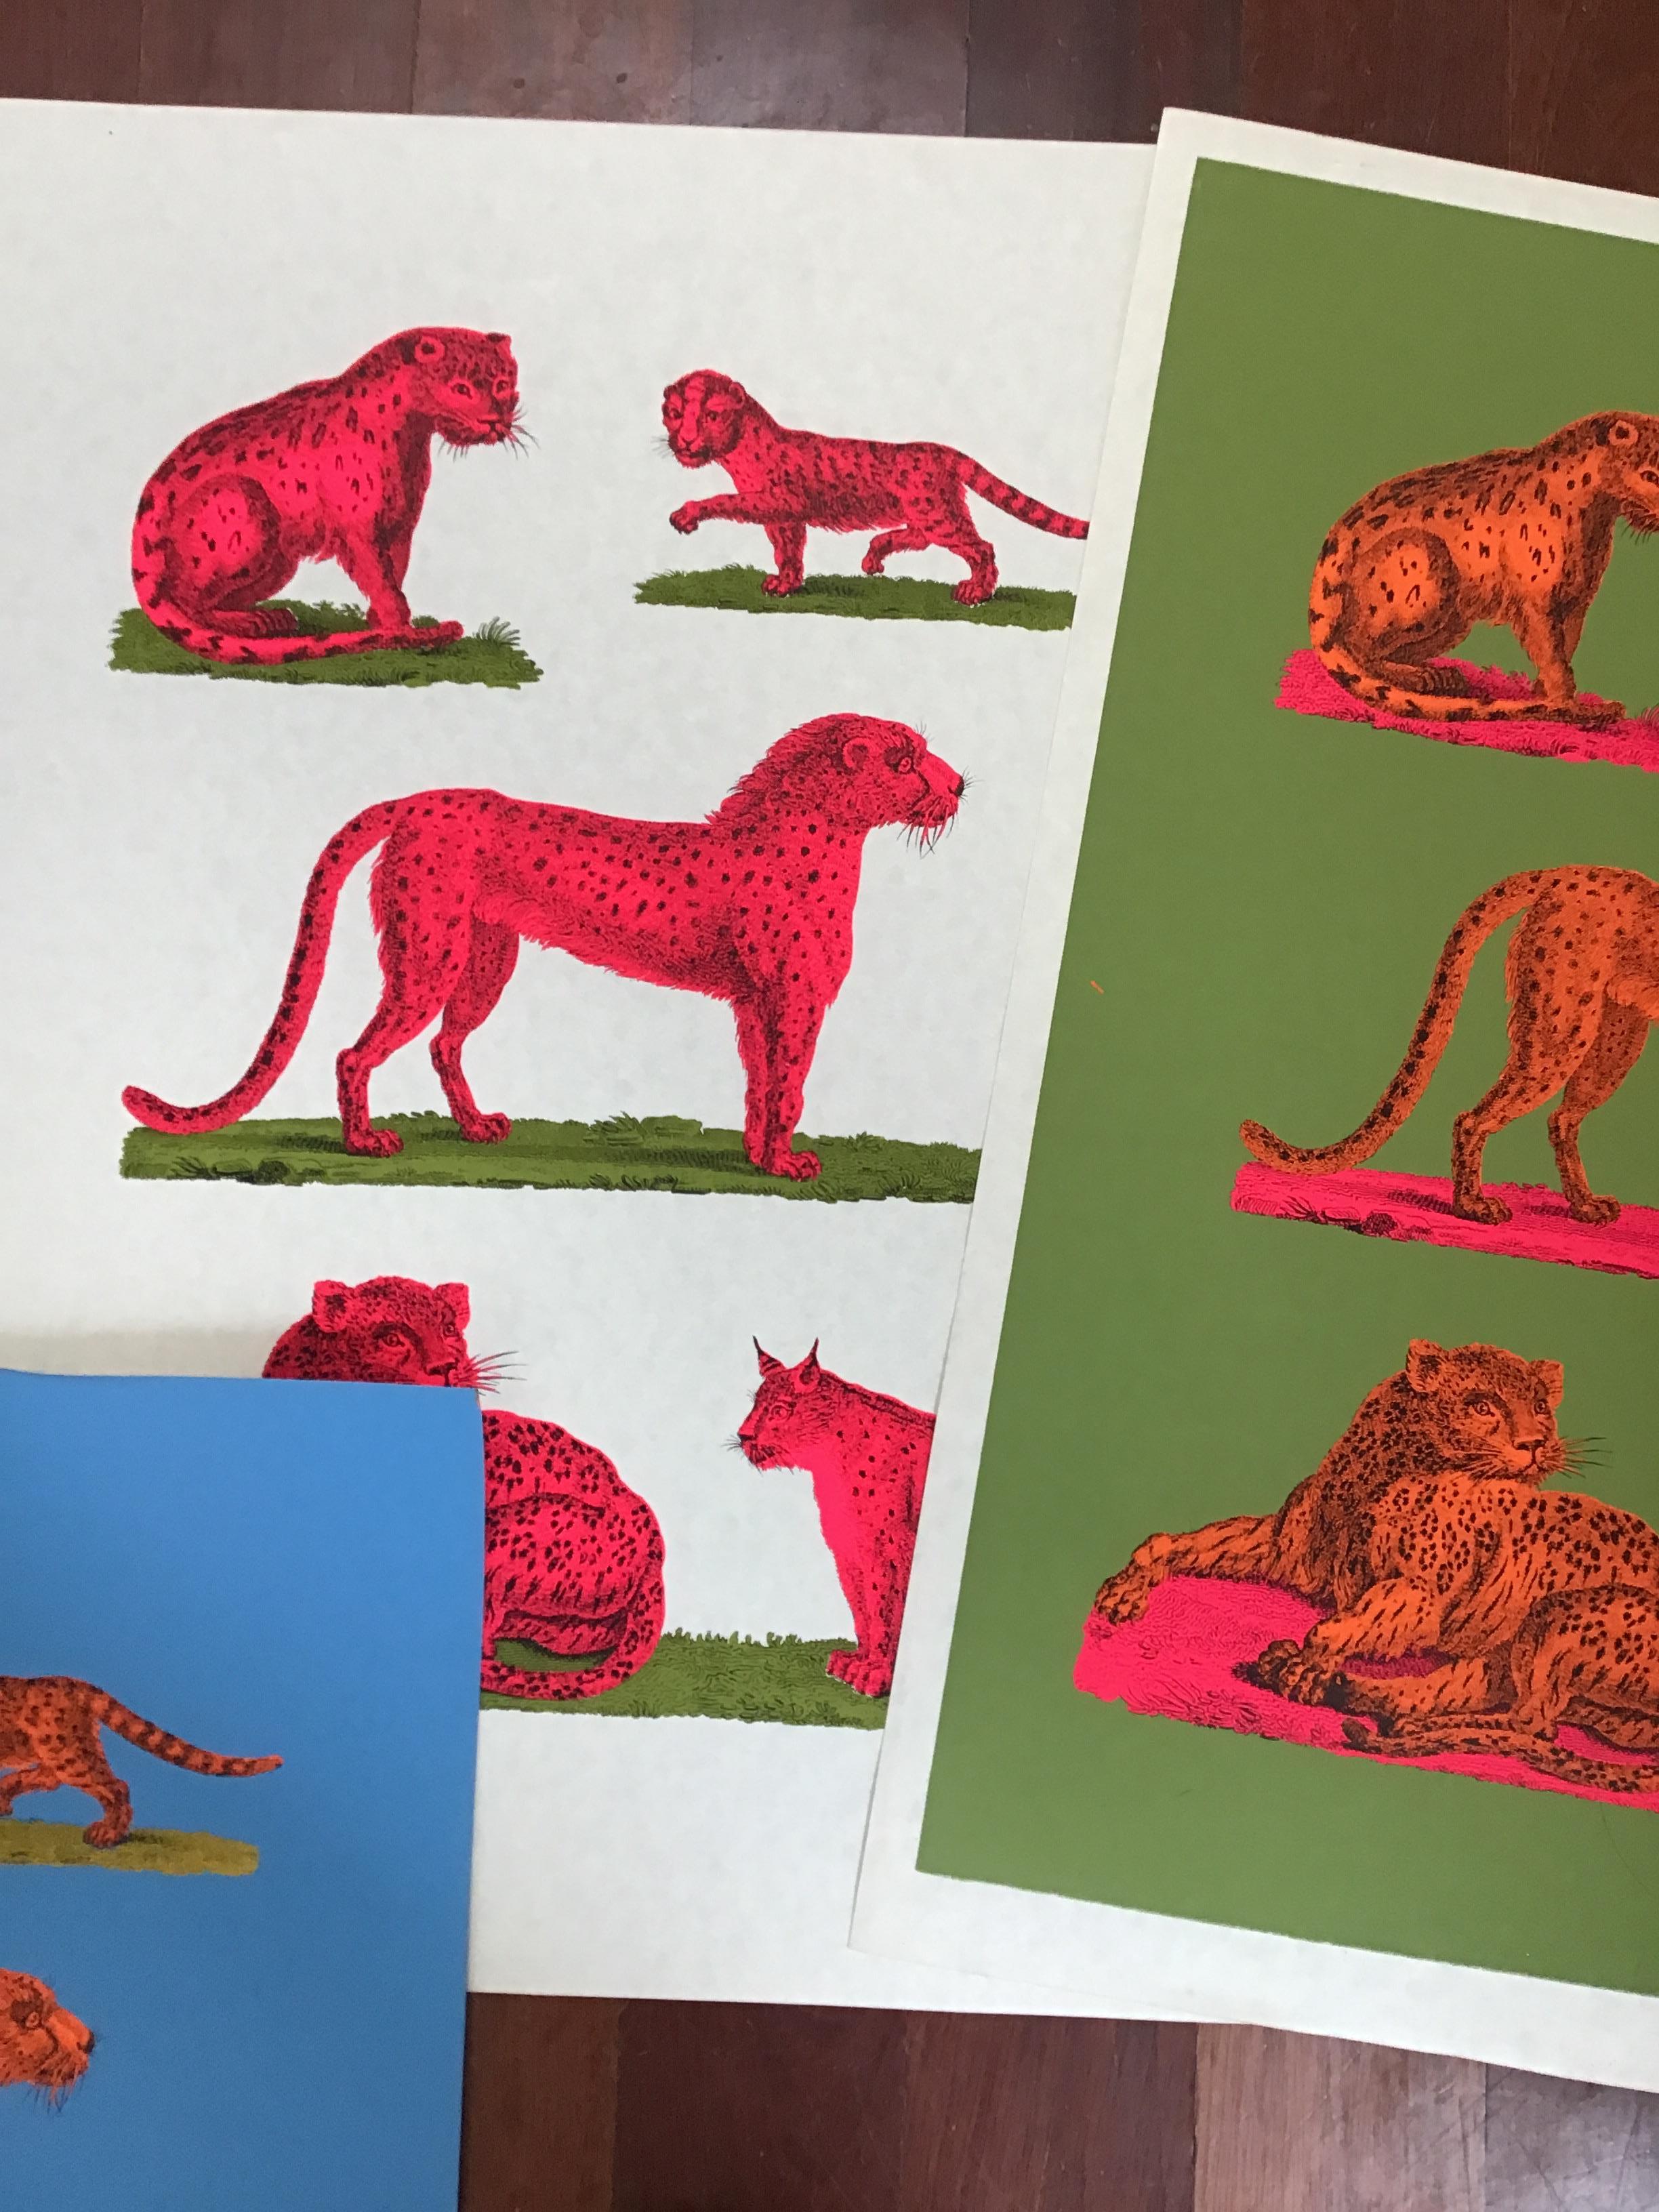 Paper 1970s Tiber Press Cheetah Lithographs